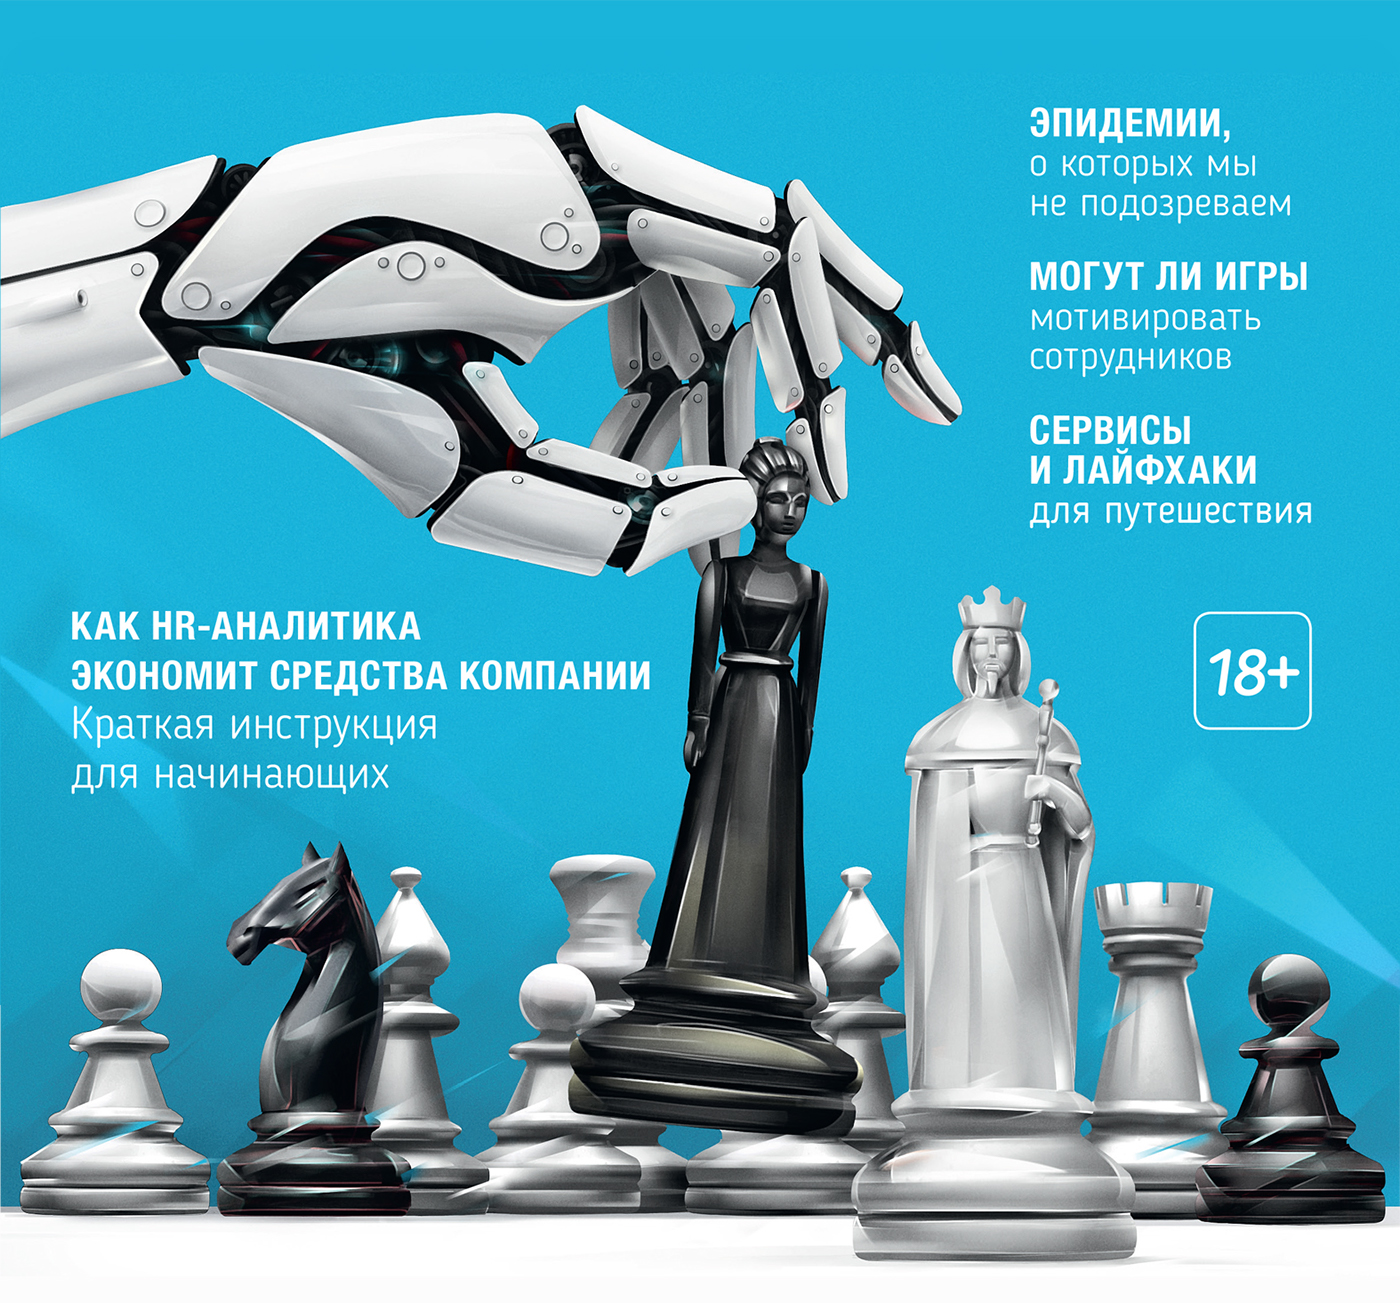 cover magazine chess ILLUSTRATION  robot hr analytics Health